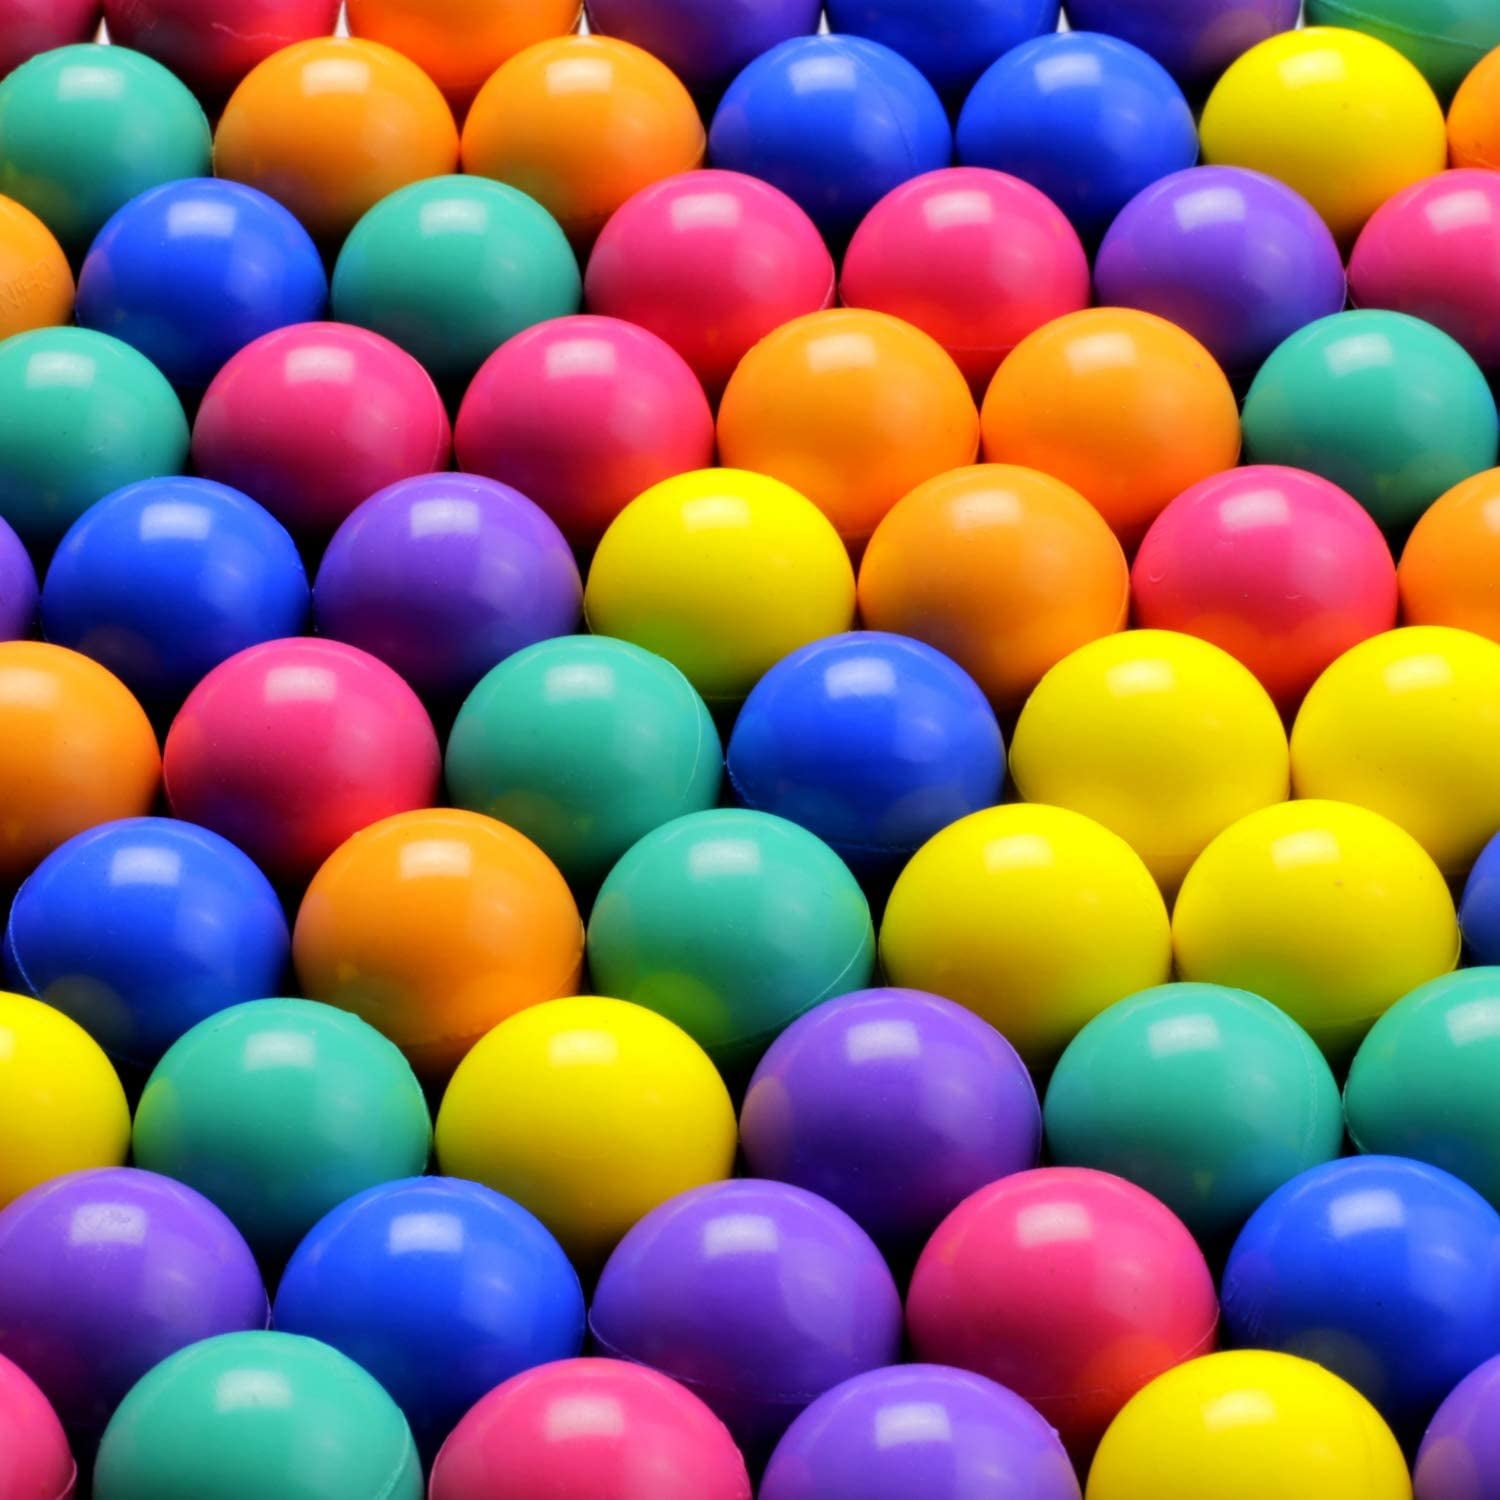 Bouncy balls. Party balls